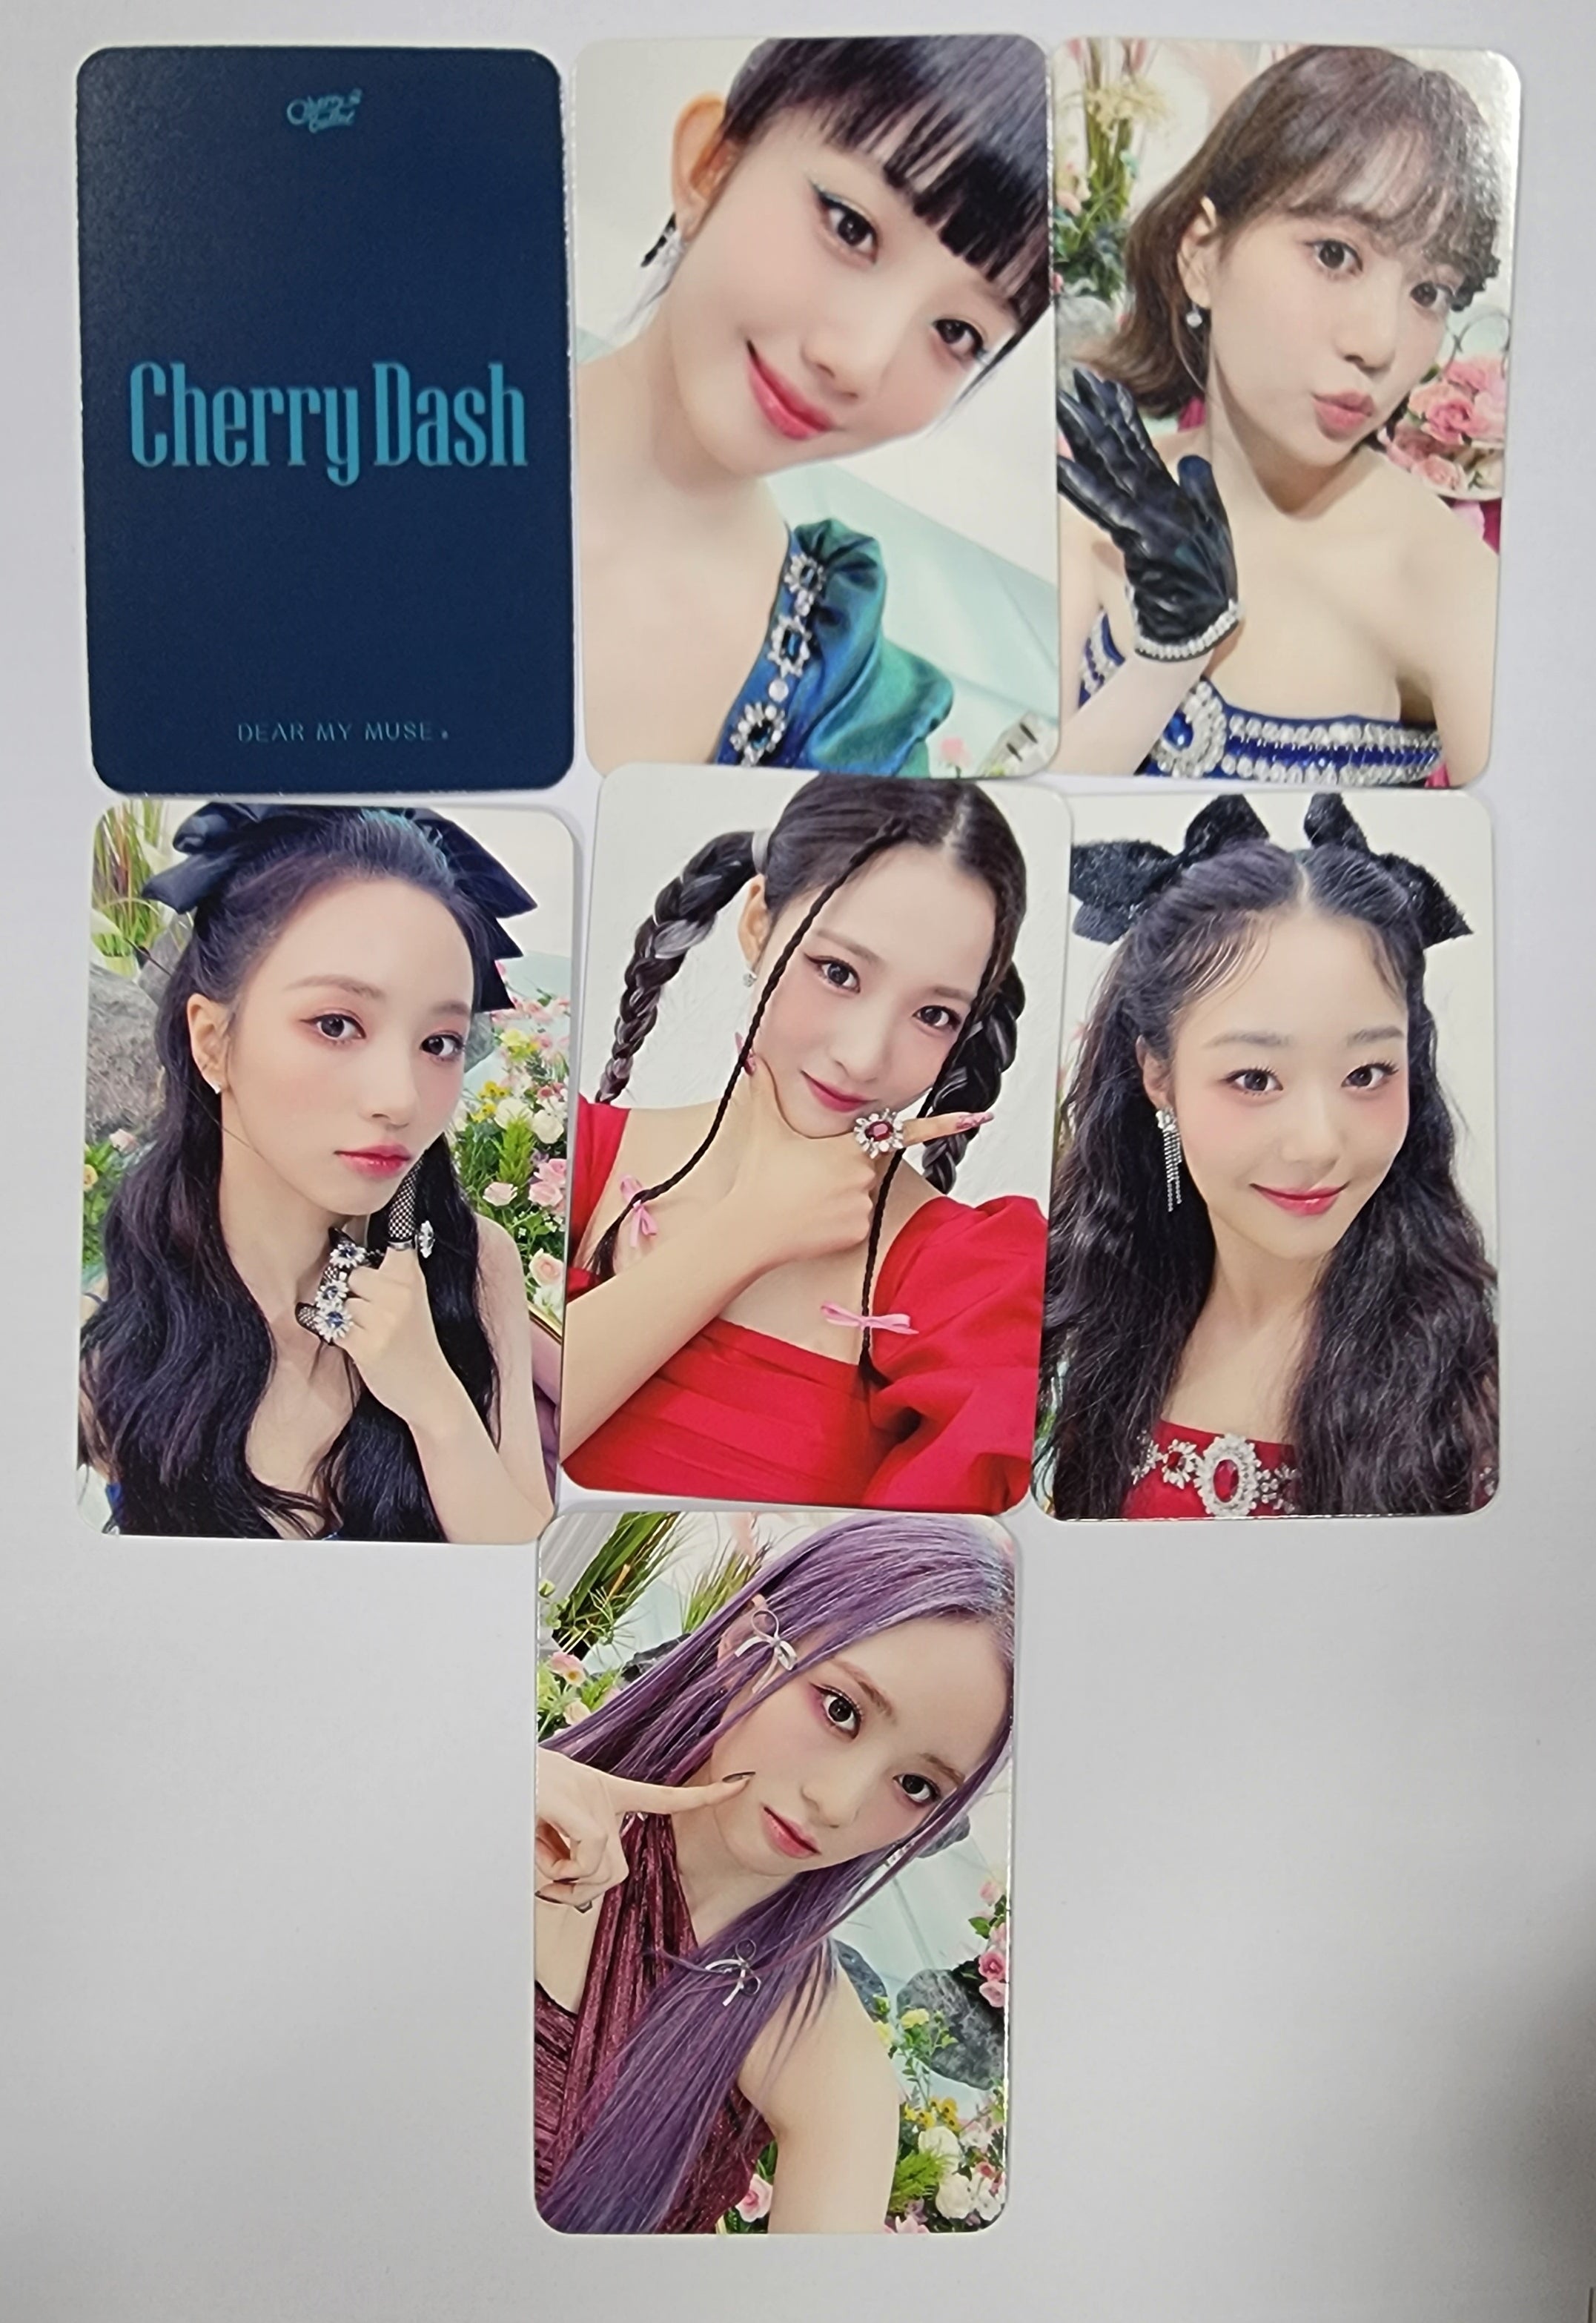 Cherry Bullet 'Cherry Dash' - Dear My Muse 予約特典フォトカード